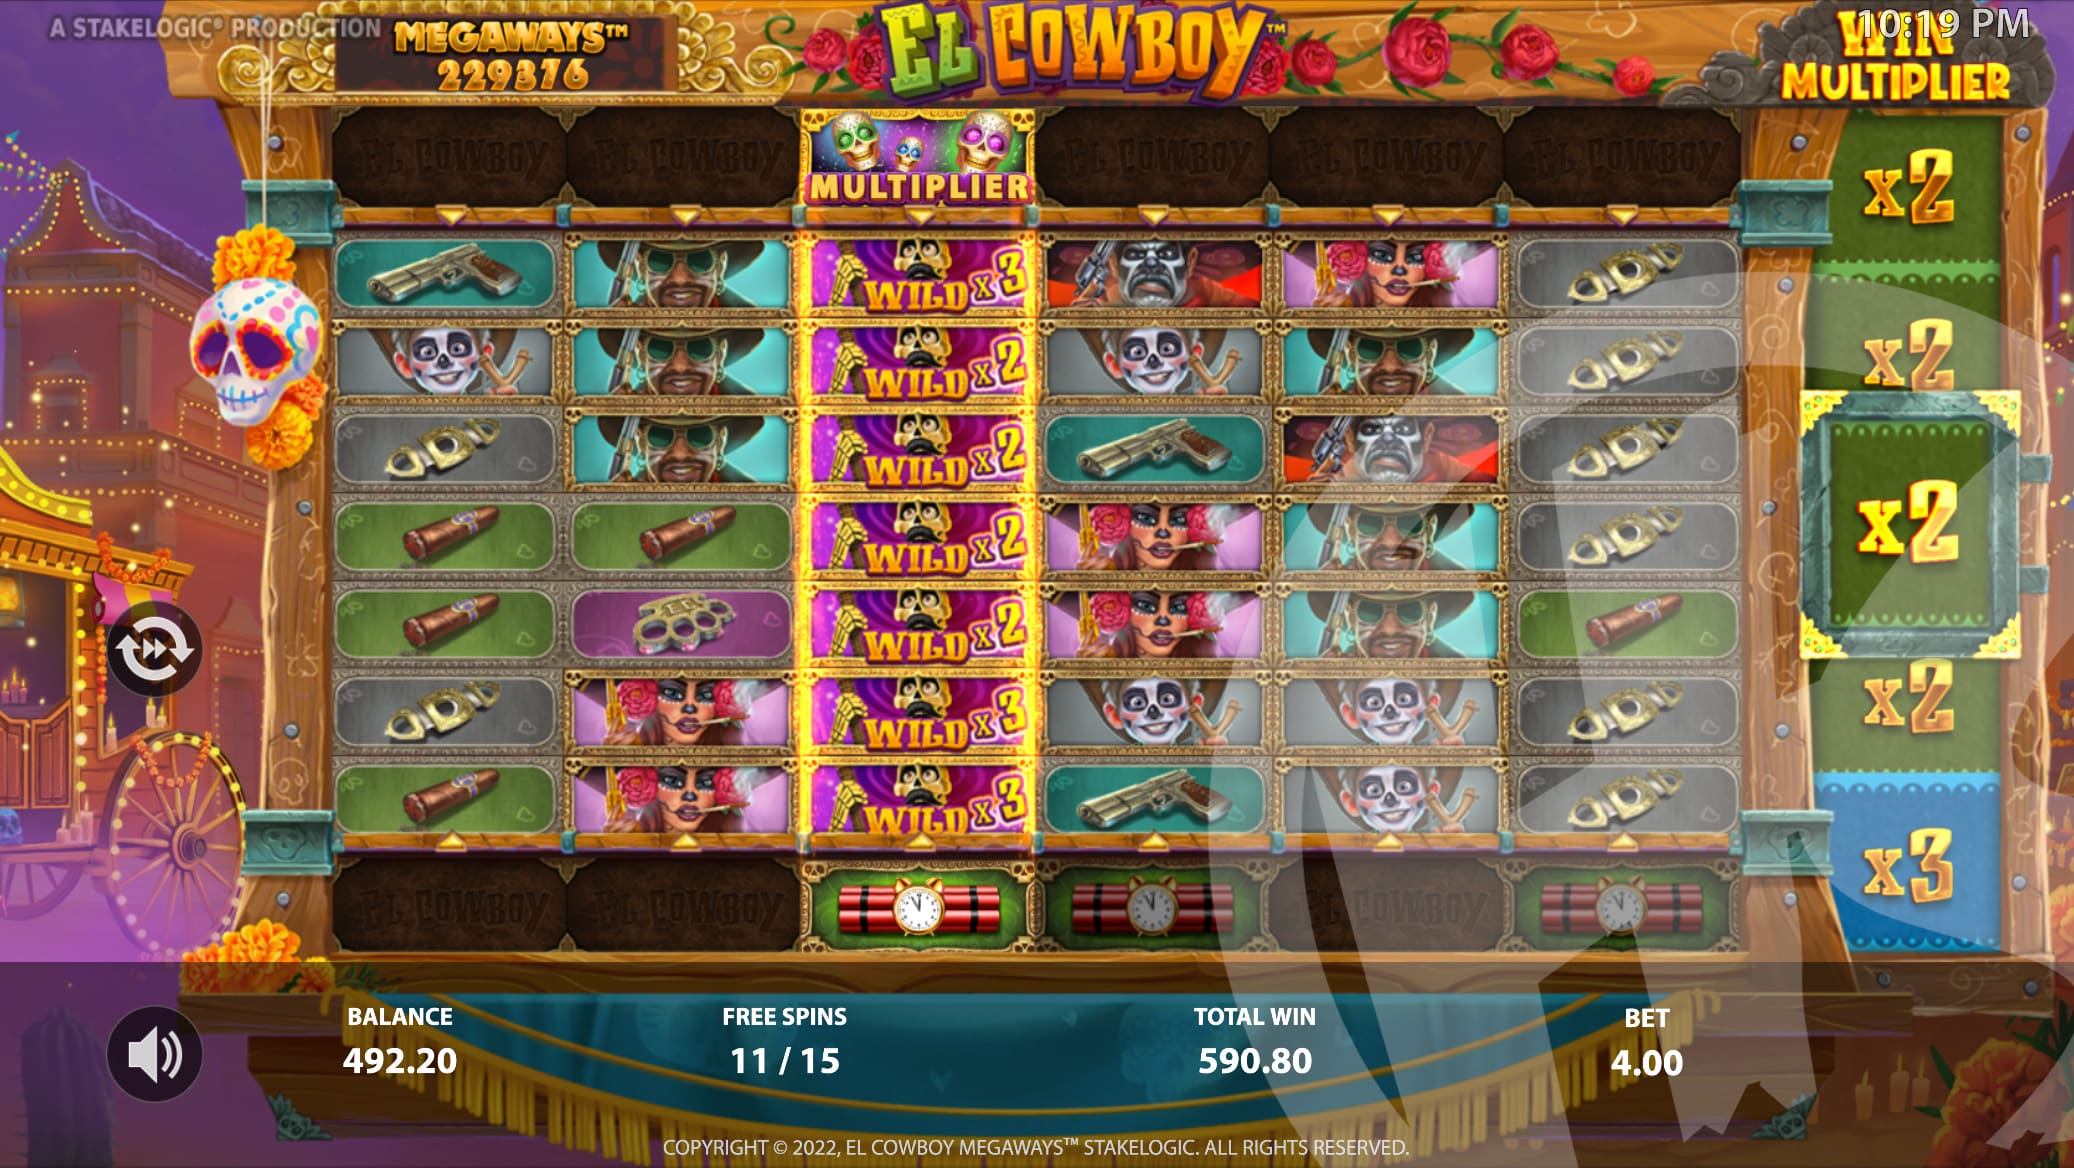 El Cowboy Megaways Free Spins